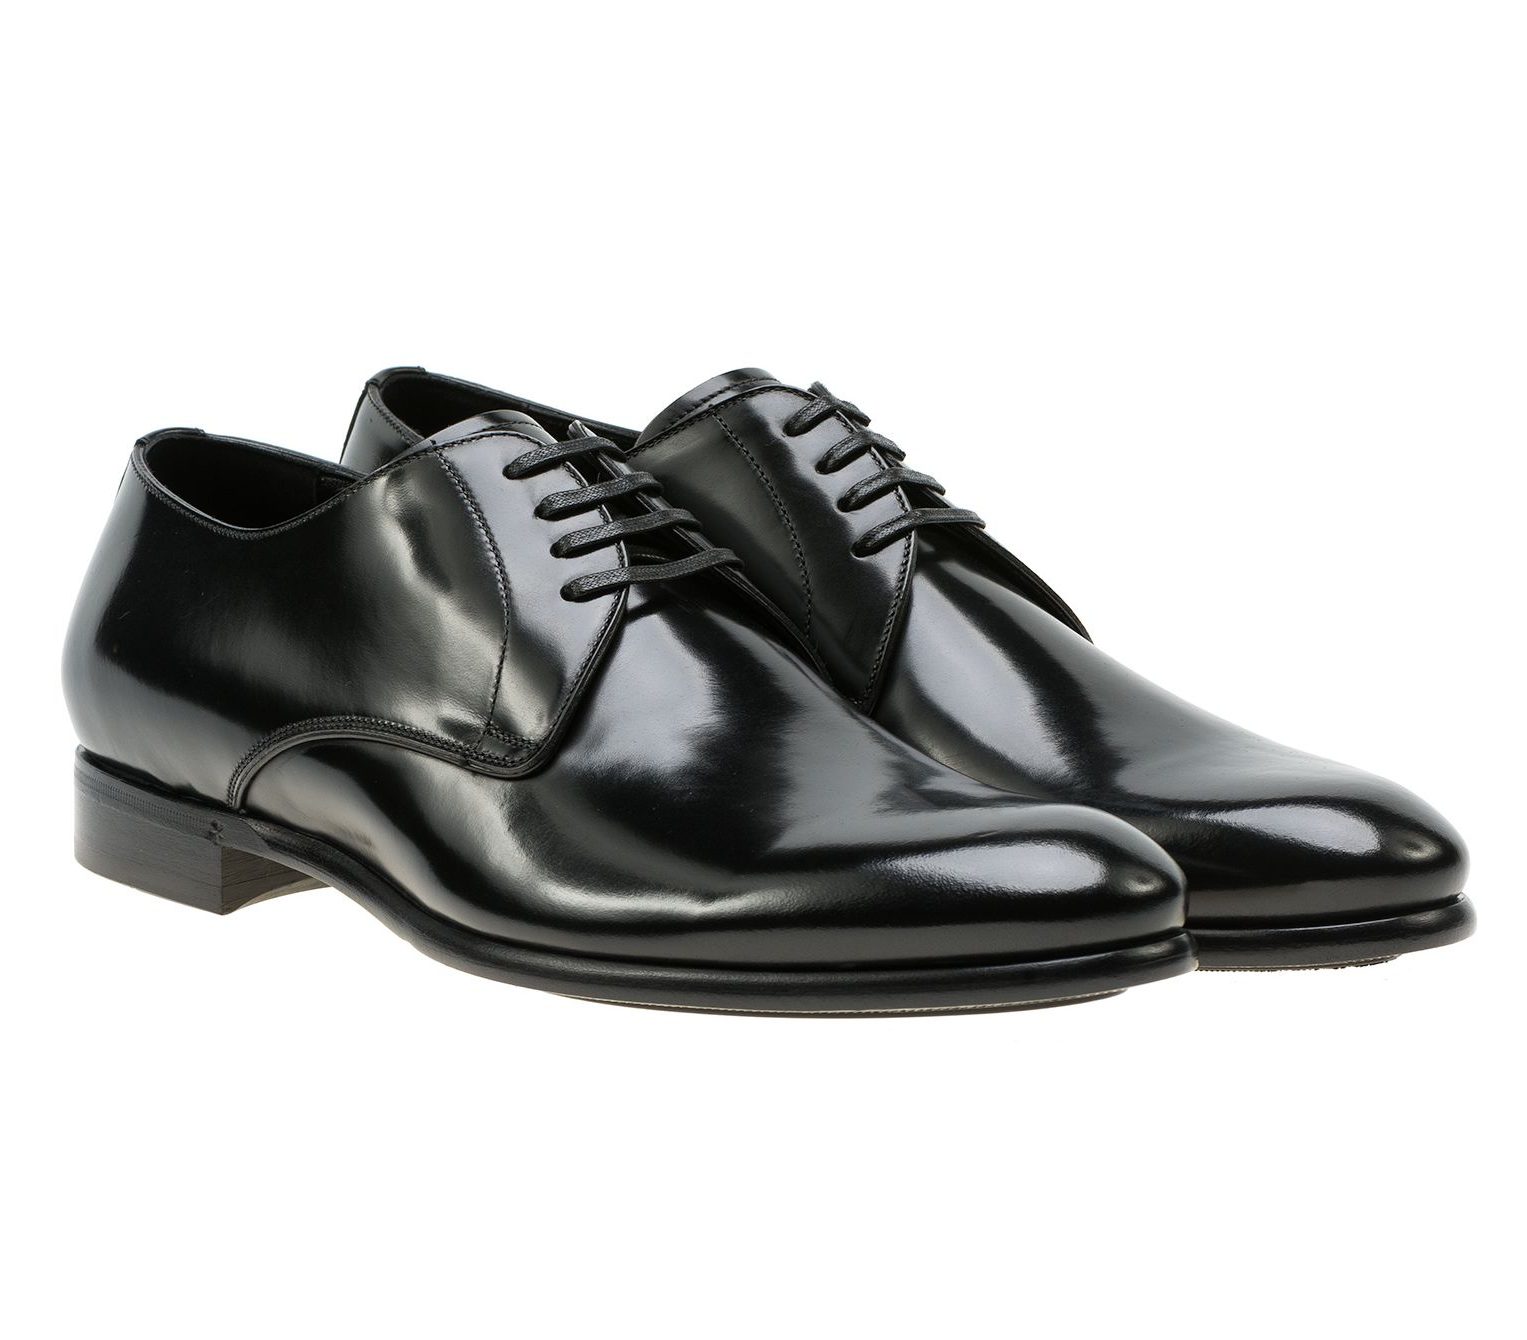 40 Ways to Wear Derby Shoes – The Sharp Footwear for Men